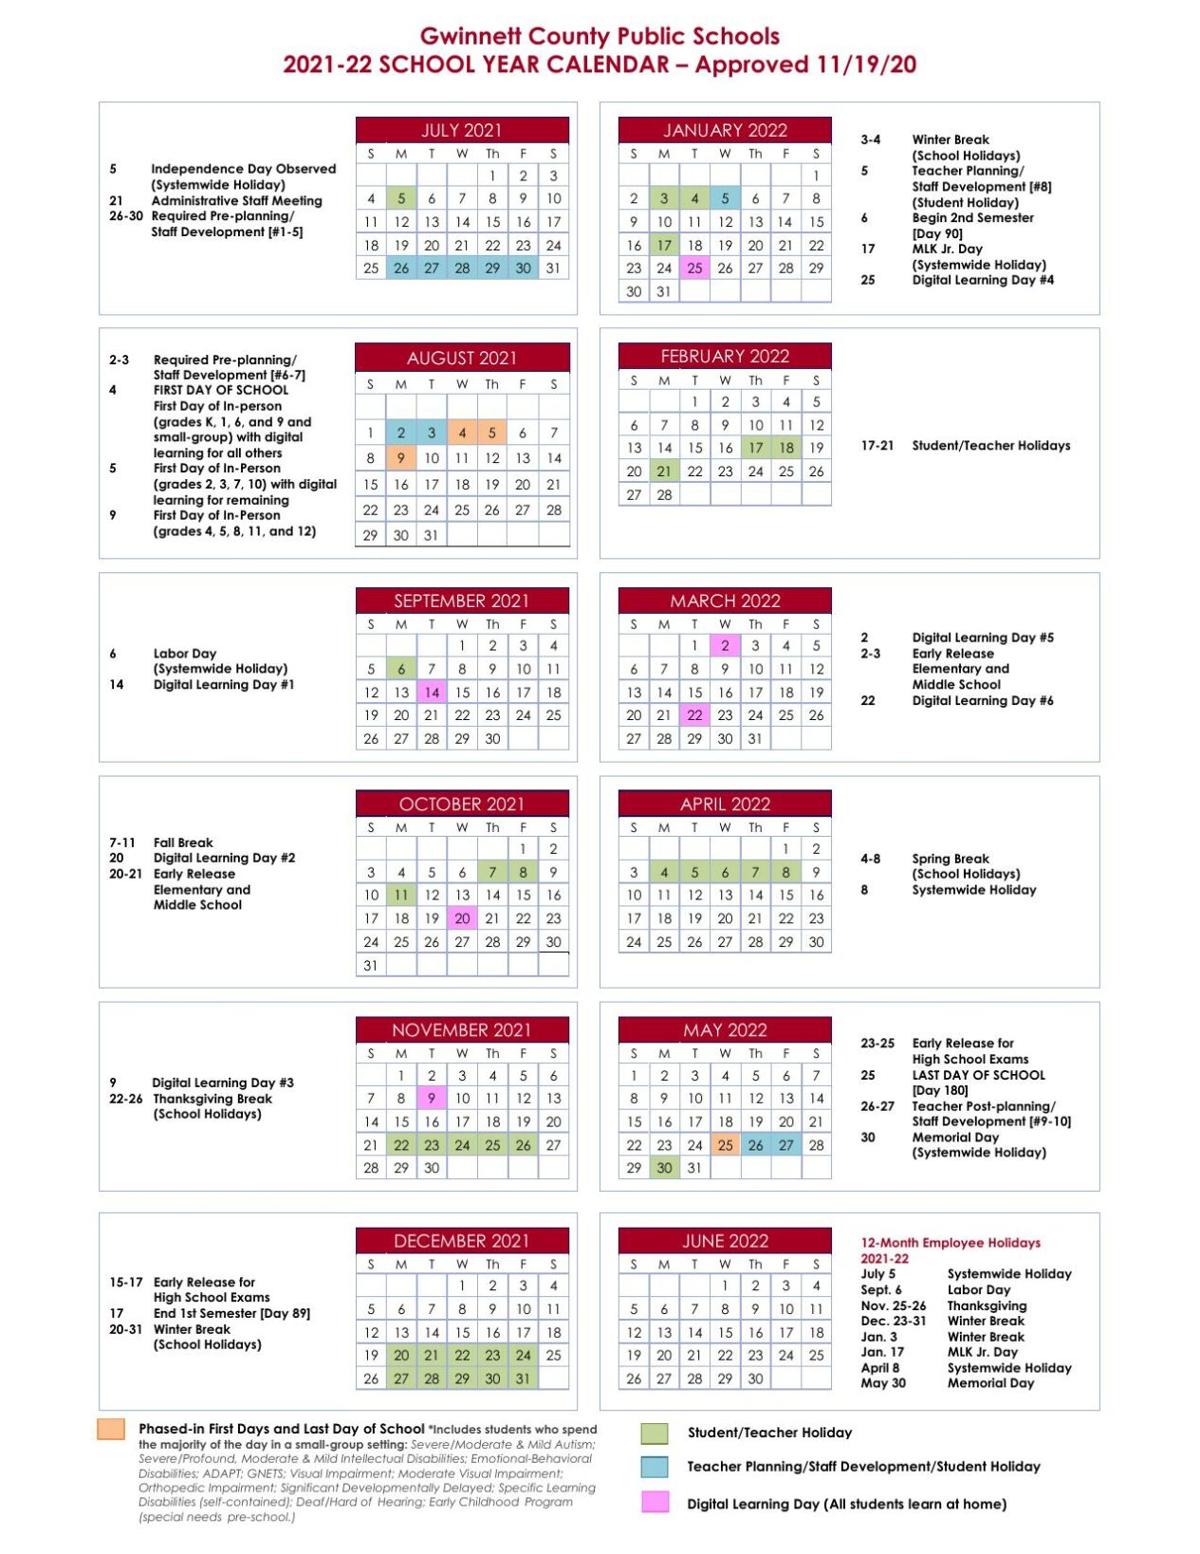 Gcps Calendar 2022 Gwinnett County Public Schools' 2021-2022 School Year Calendar | |  Gwinnettdailypost.com